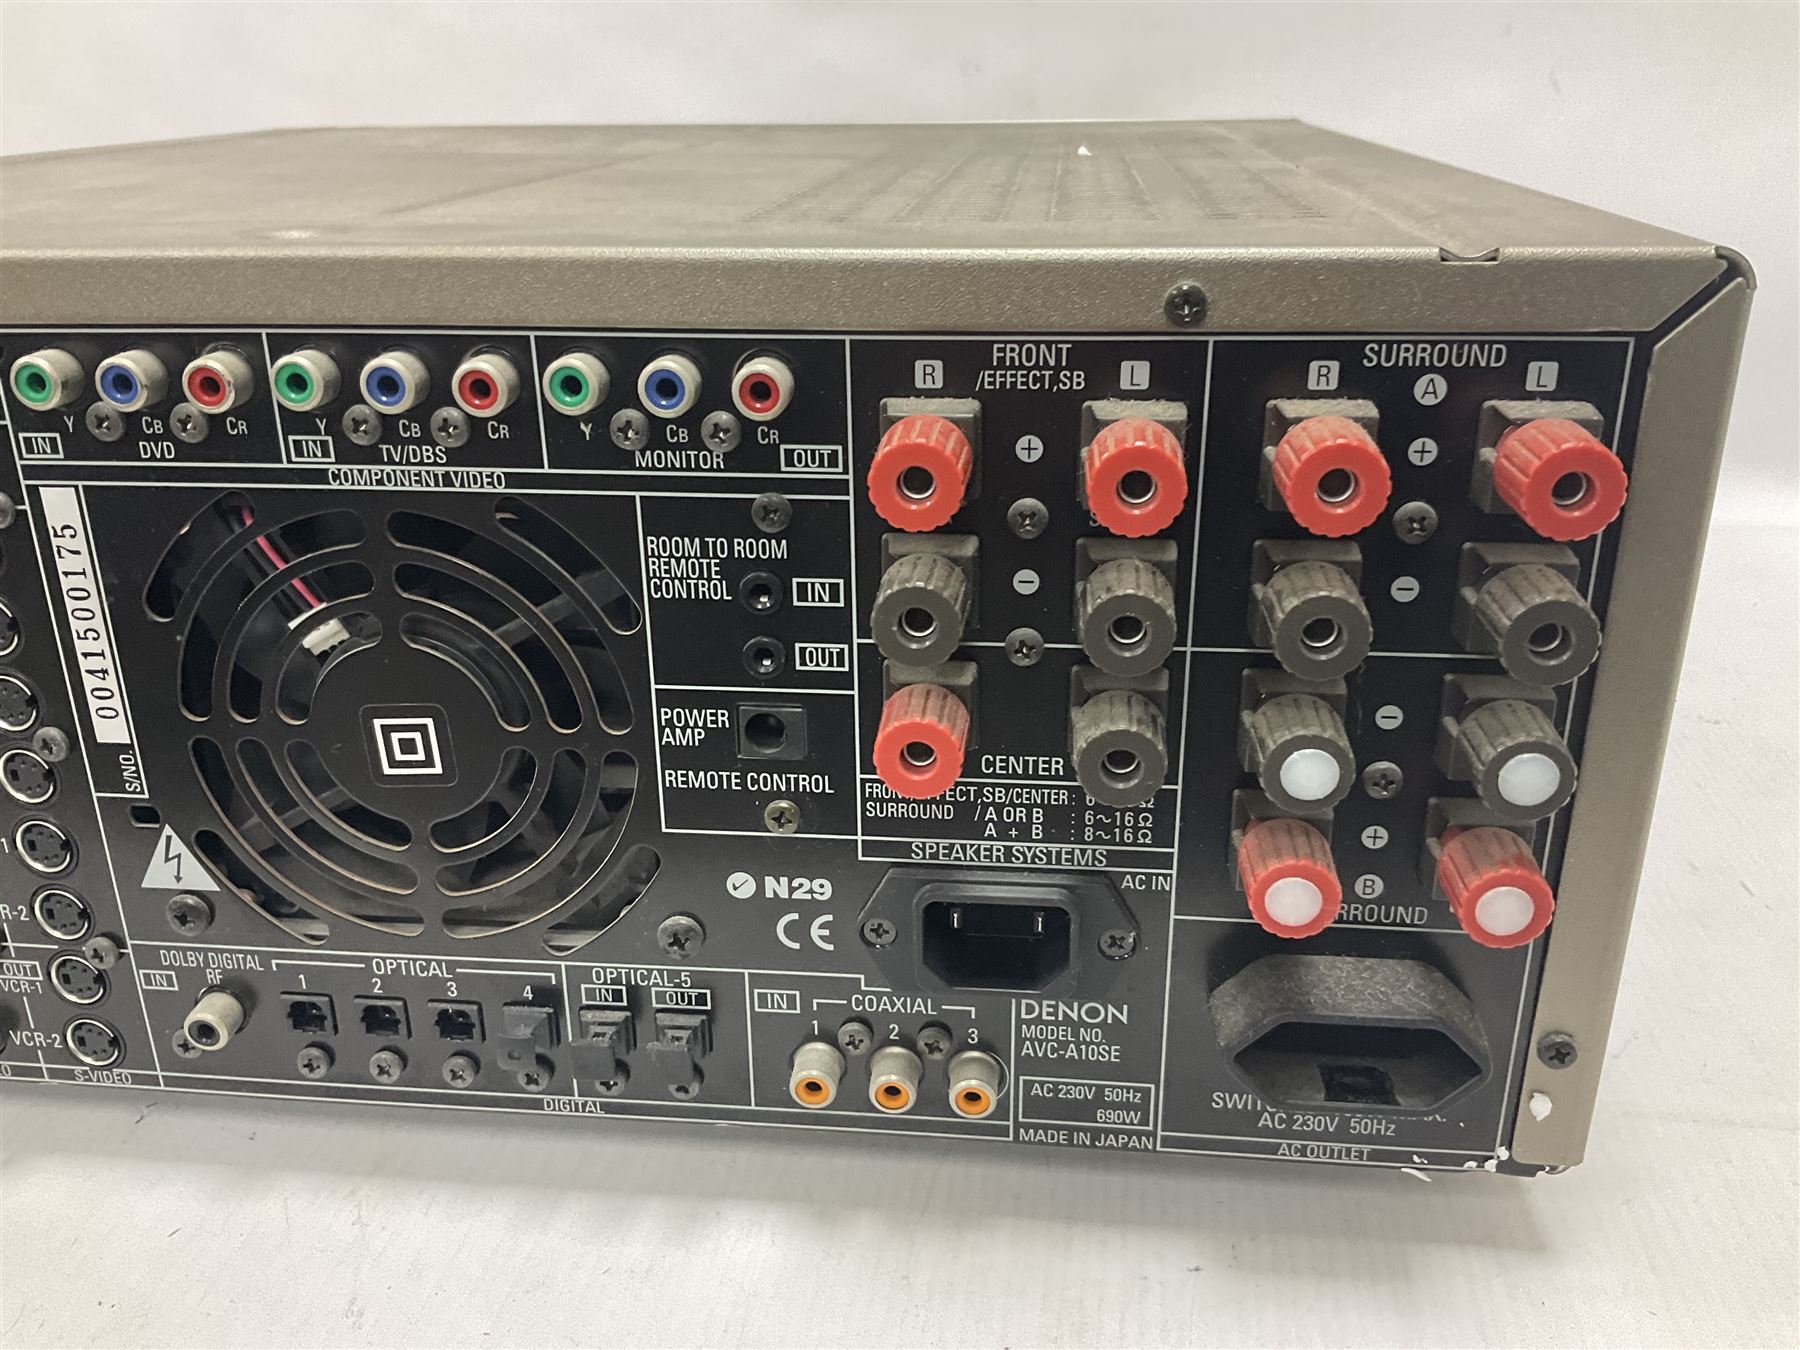 Denon AVC-A10SE surround amplifier - Image 10 of 16